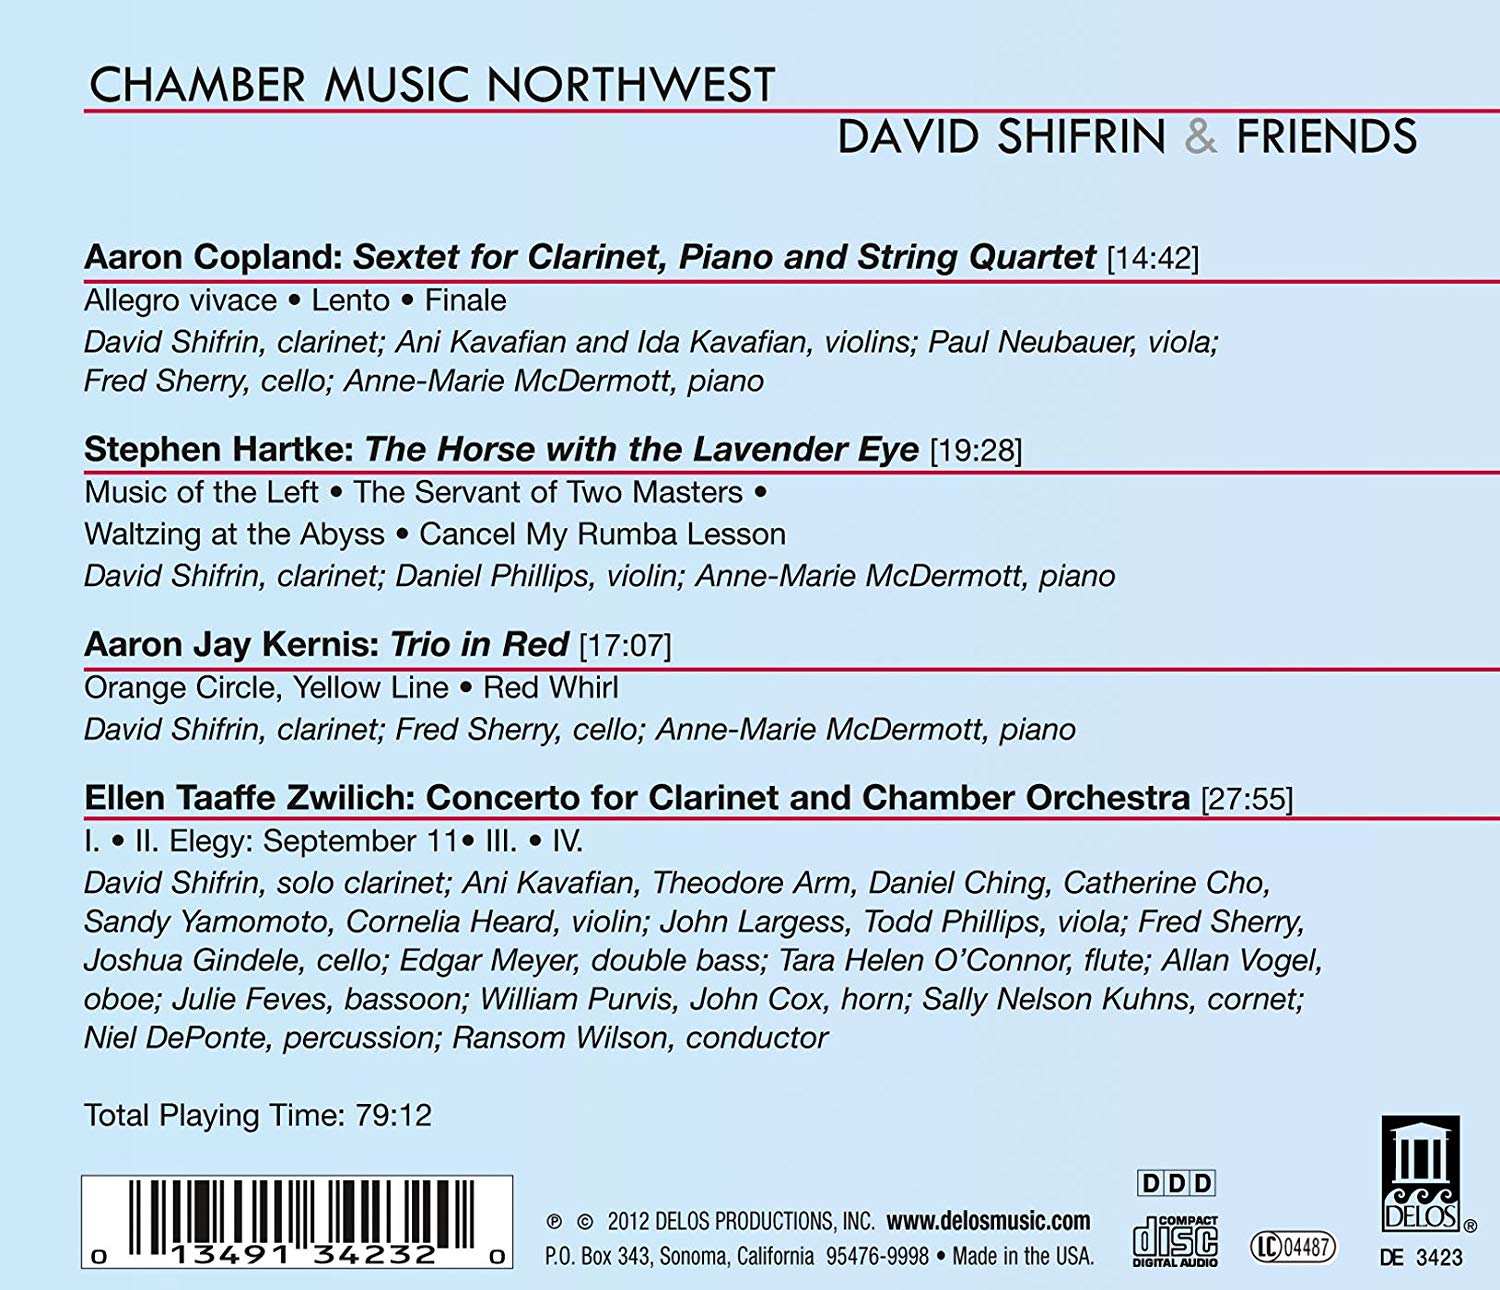 Chamber Music Northwest - Copland, Hartke, Jay Kernis, Taafe Zwilich - slide-1